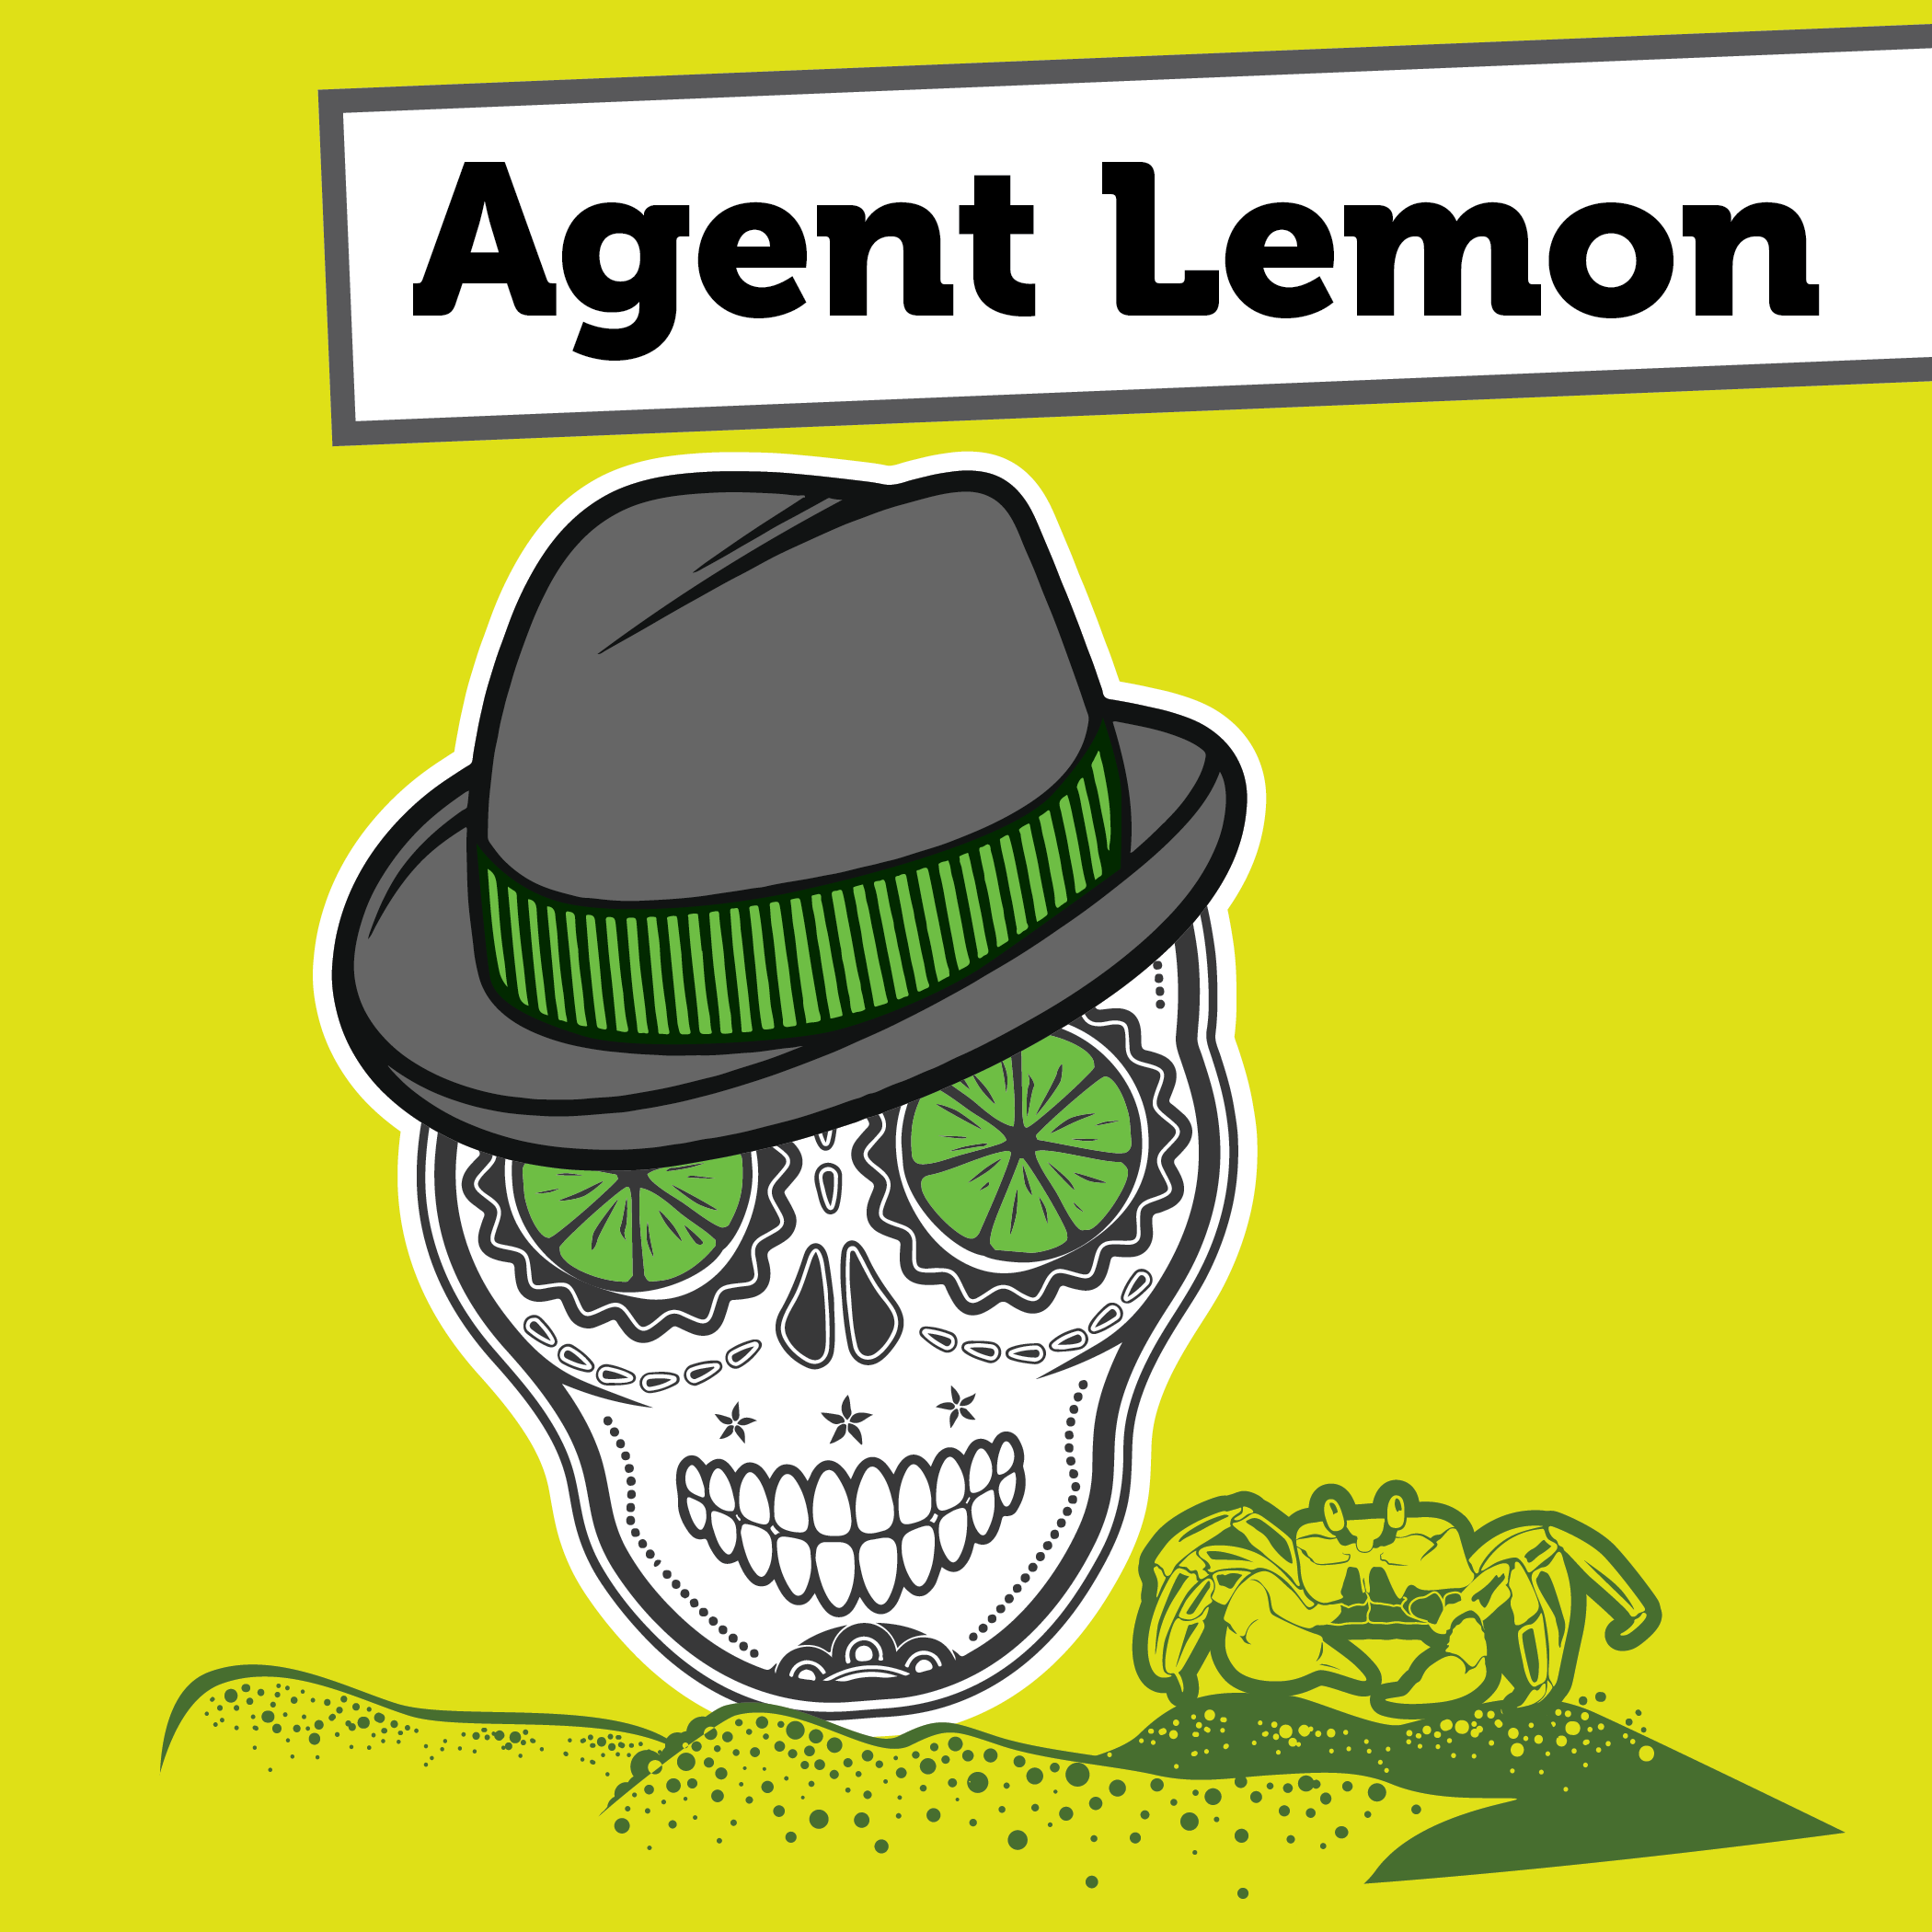 Agent Lemon